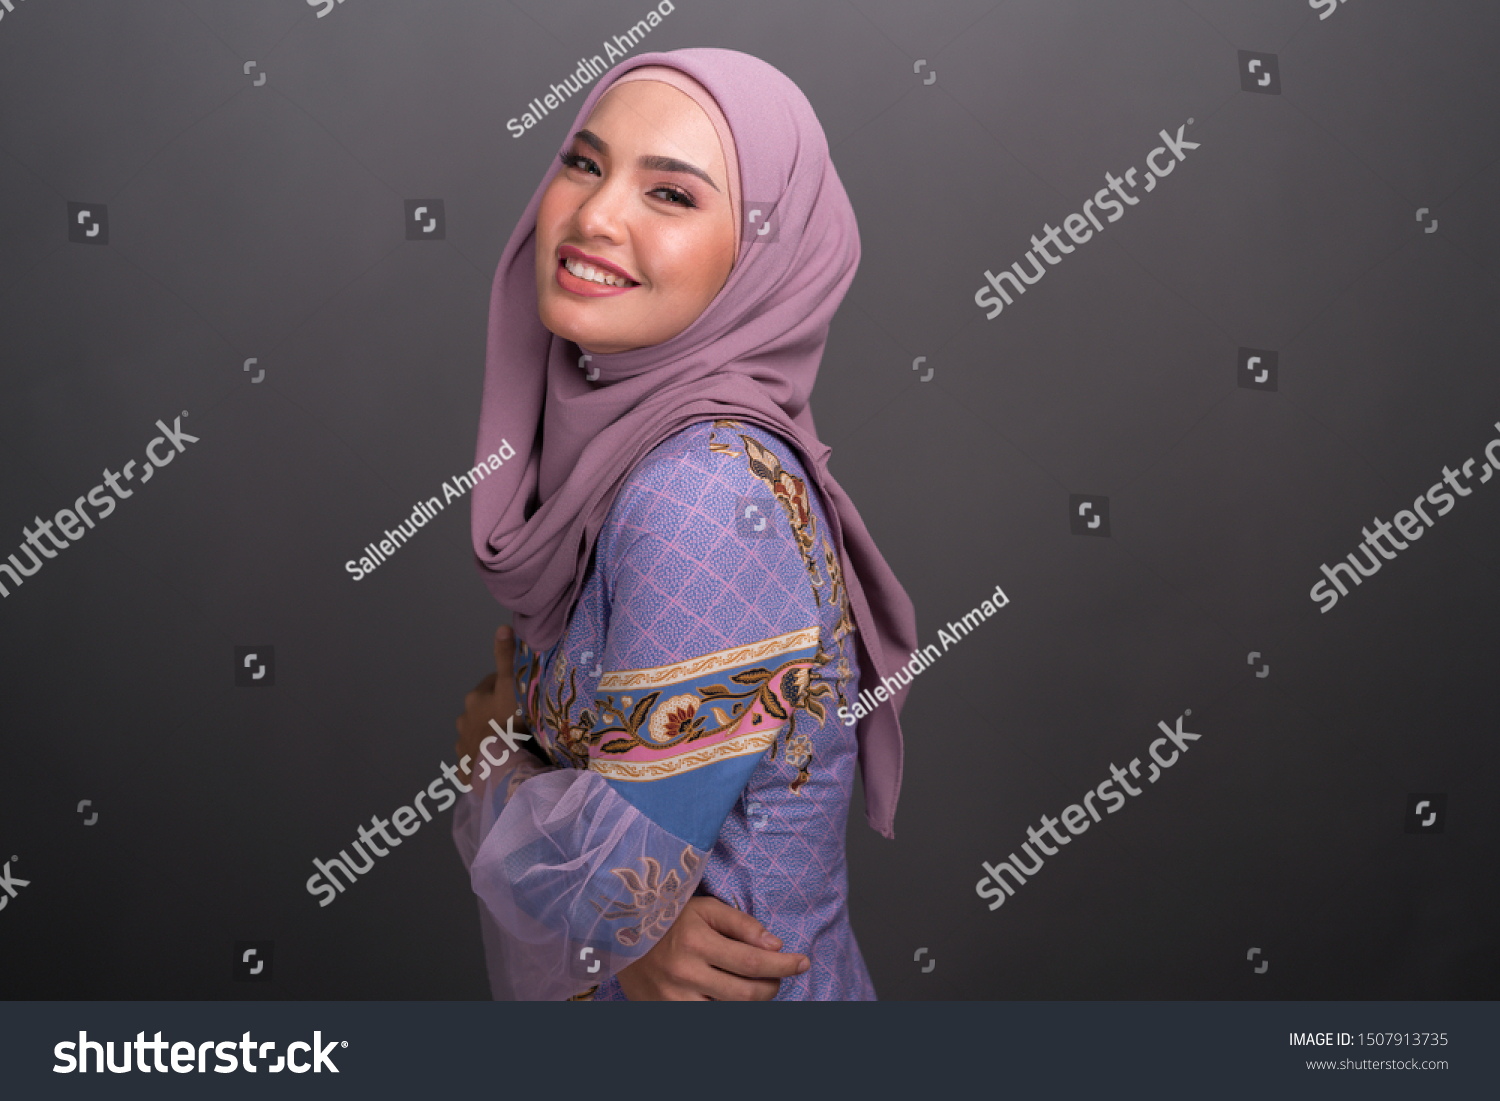 Beautiful female model wearing modern kebaya, an Asian traditional dress for Muslim woman isolated over grey background. Stylish Muslim female hijab fashion lifestyle portraiture concept. #1507913735